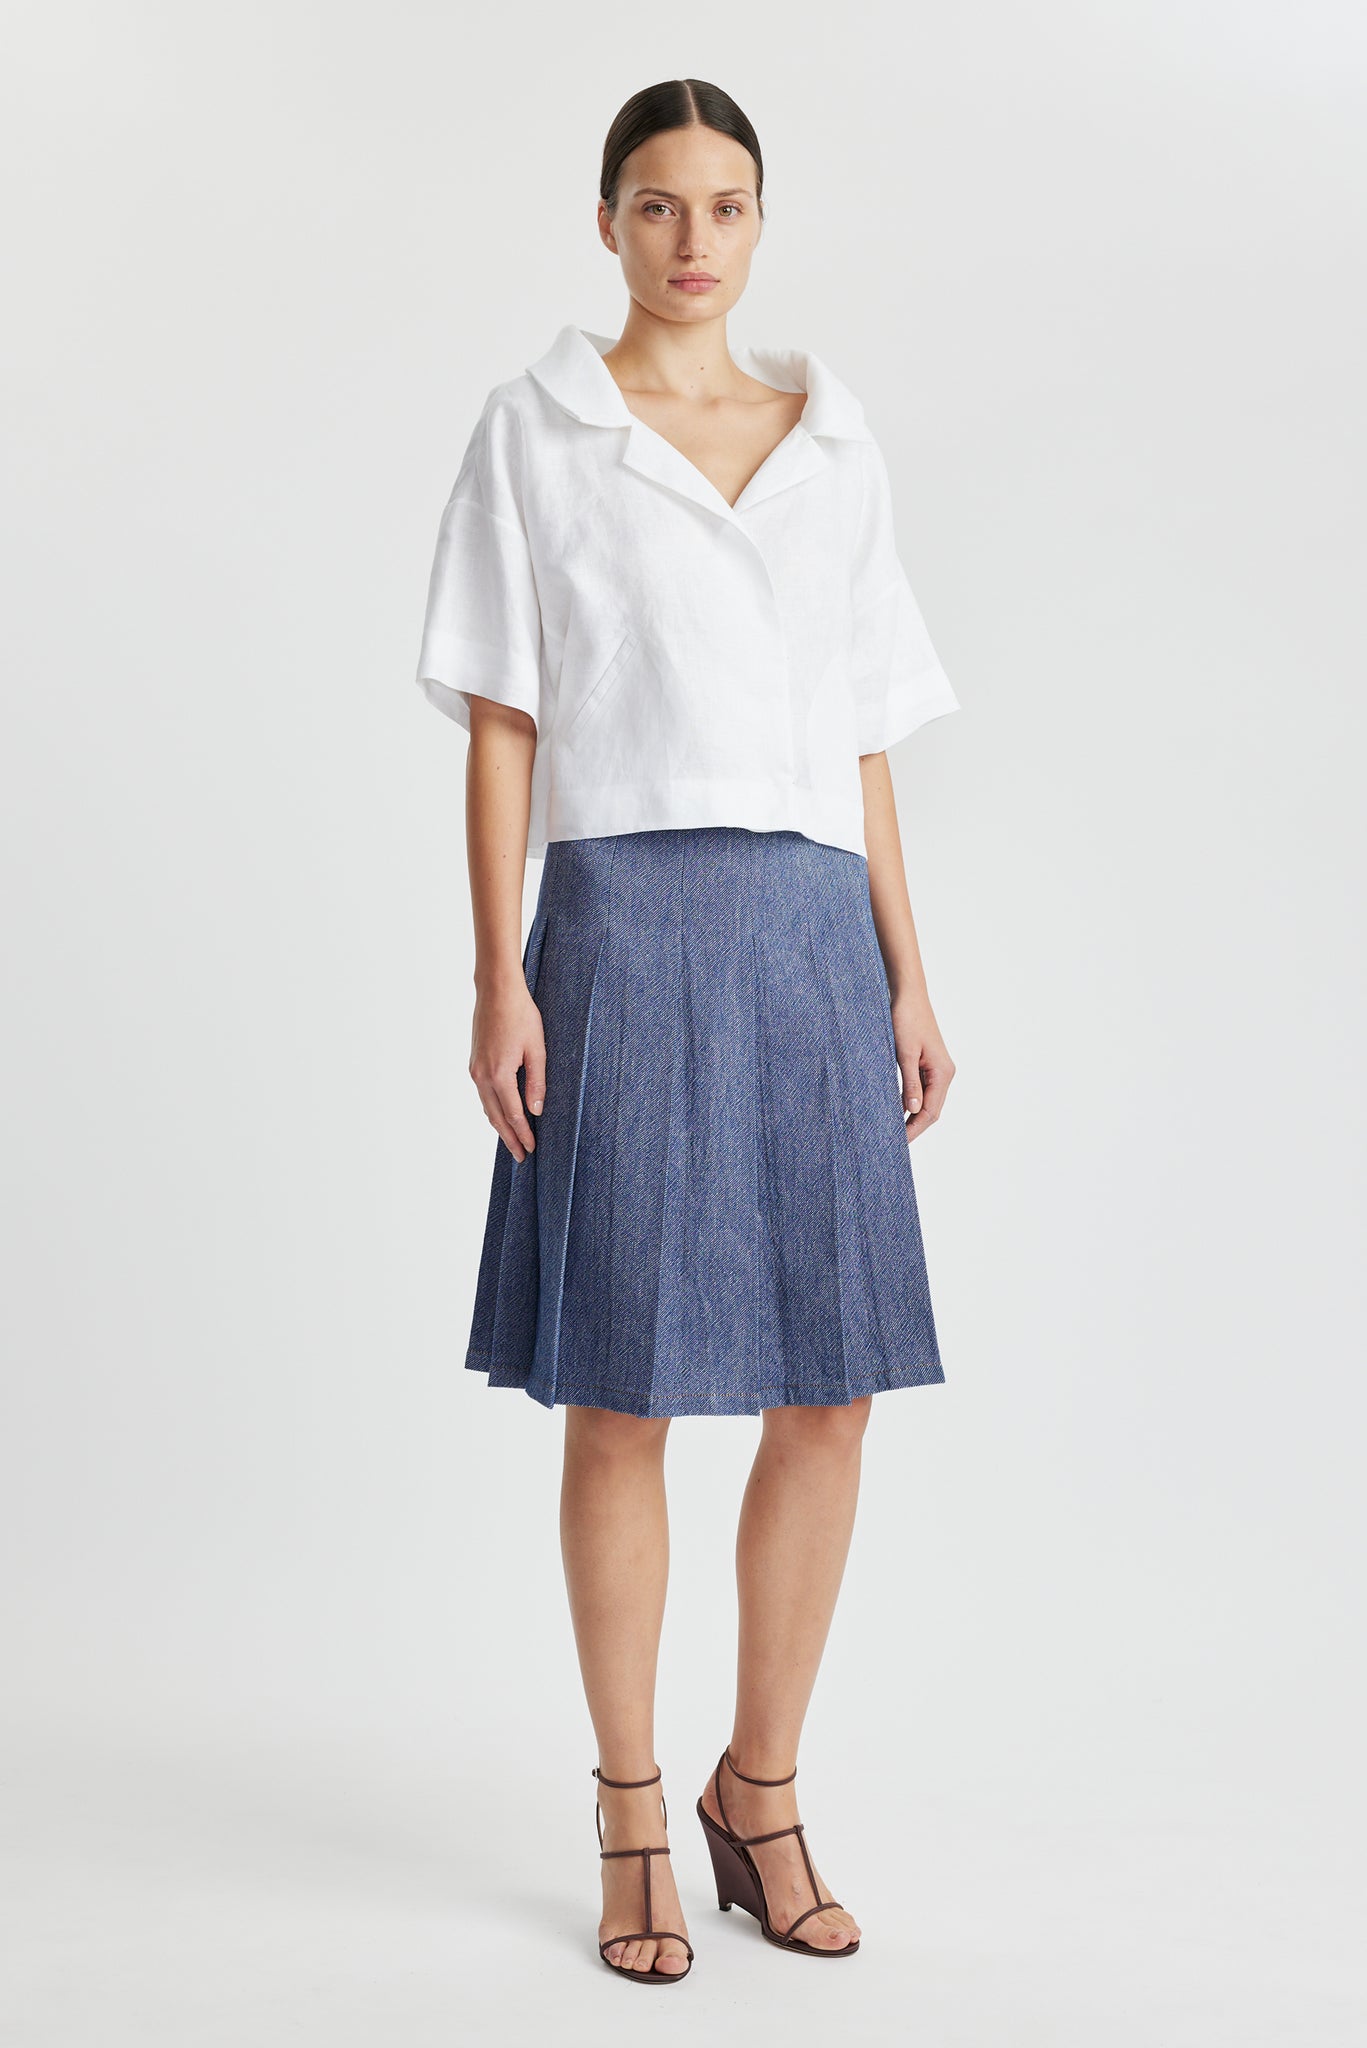 Beryl Skirt in Indigo Cotton Denim